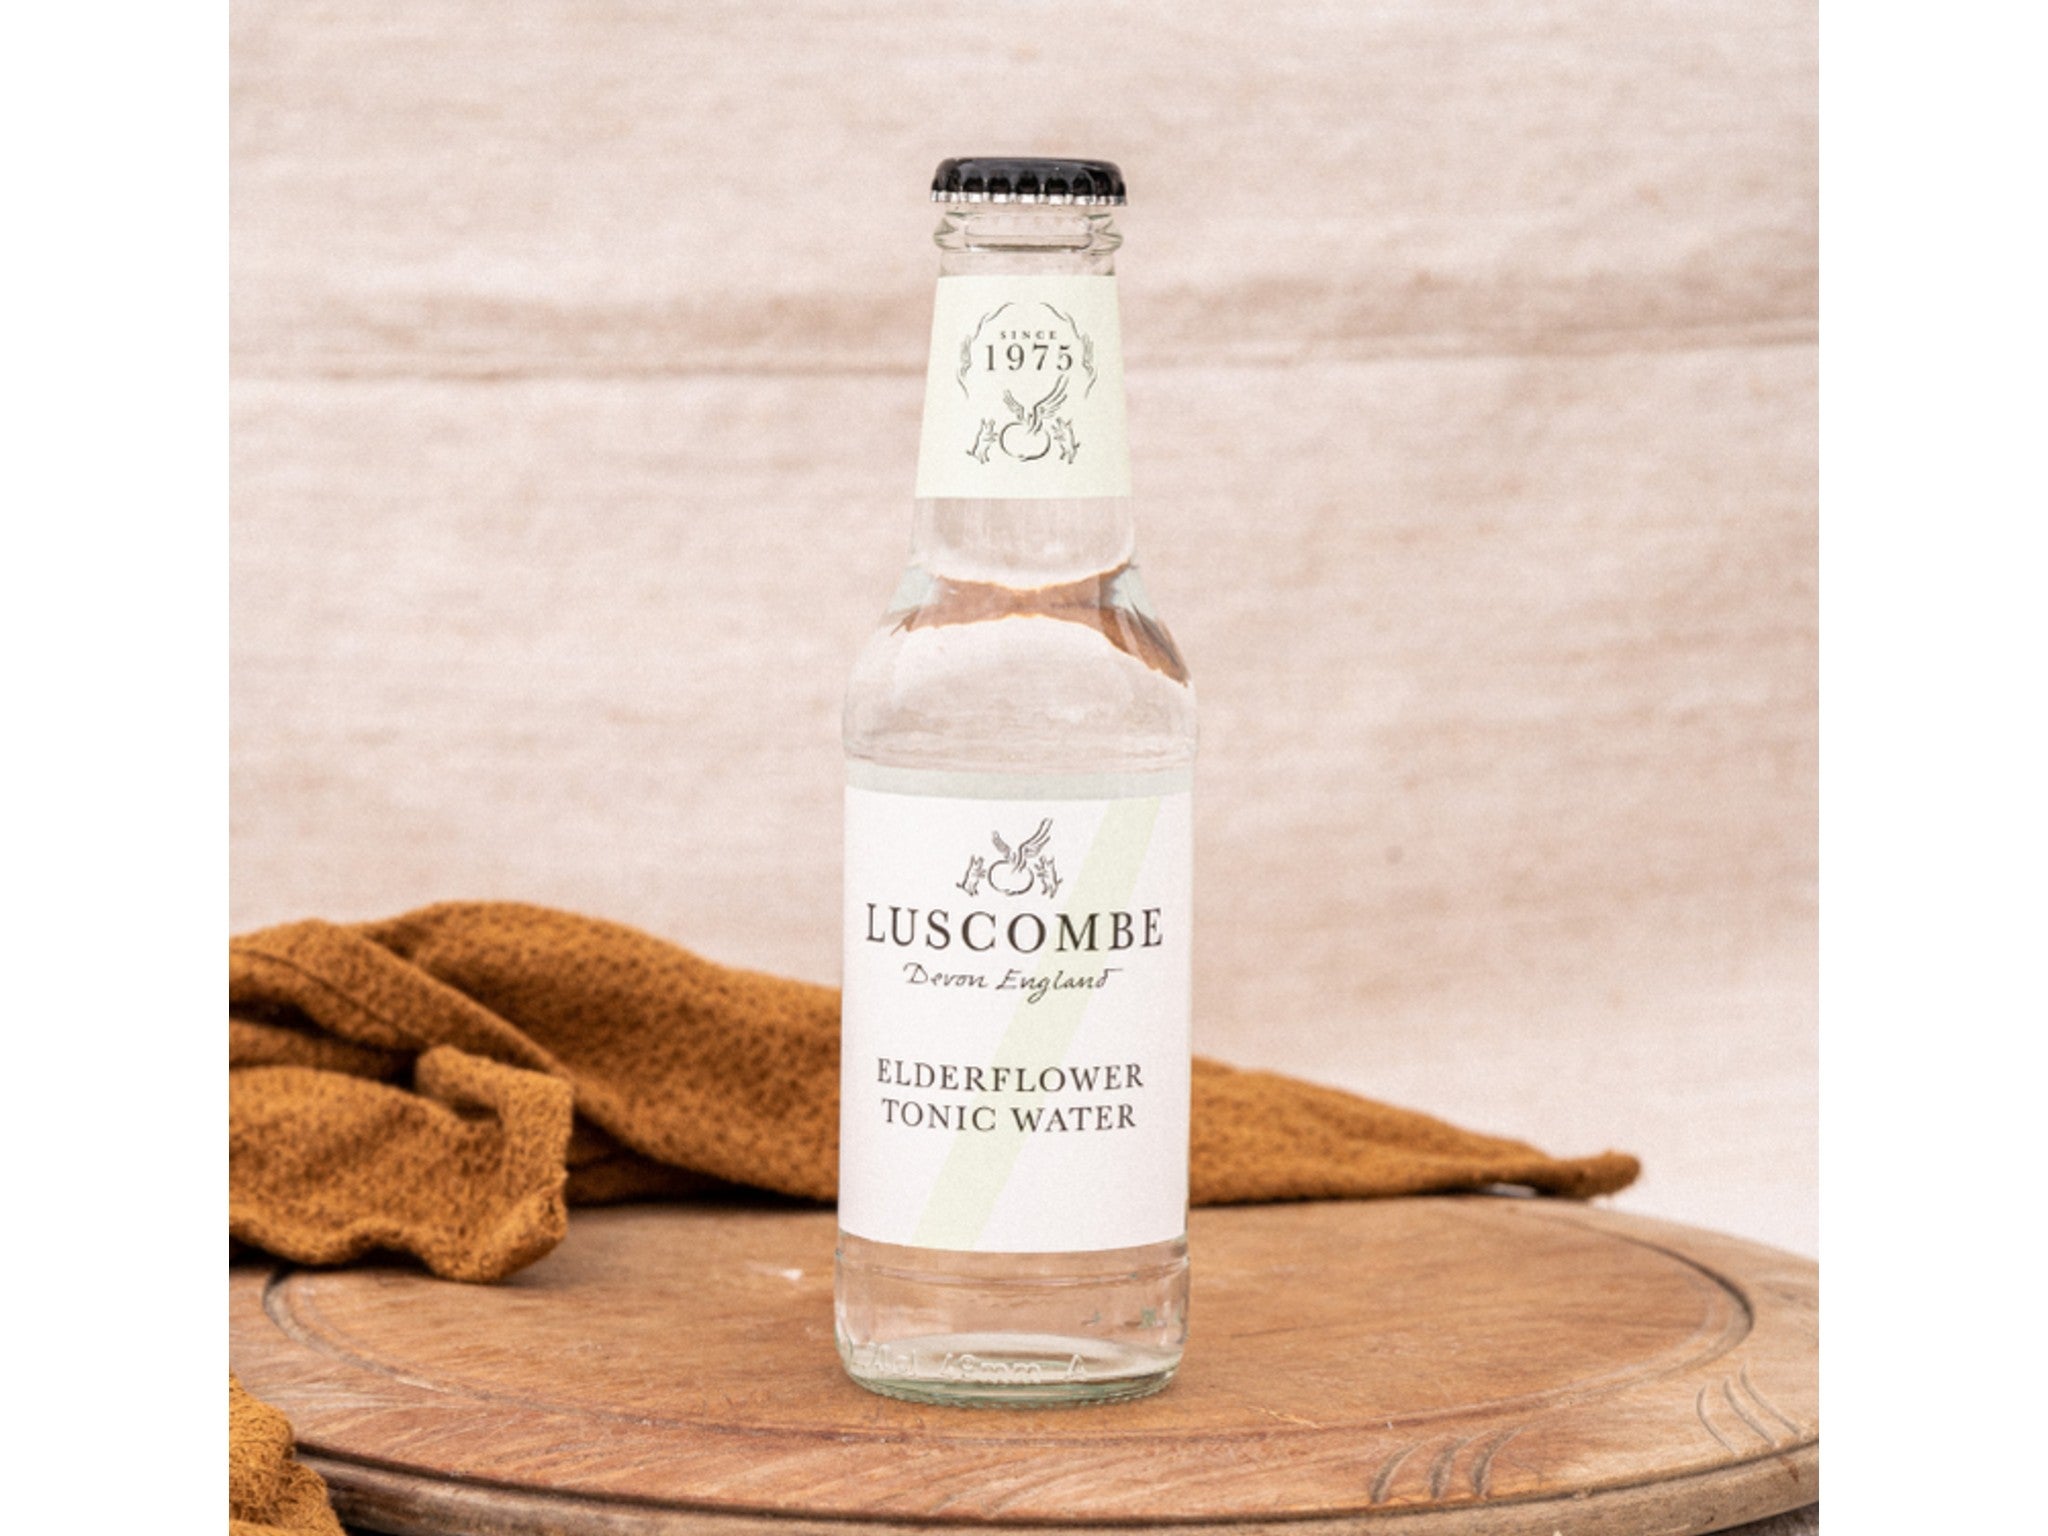 Luscombe elderflower tonic water, 200ml indybest.jpeg